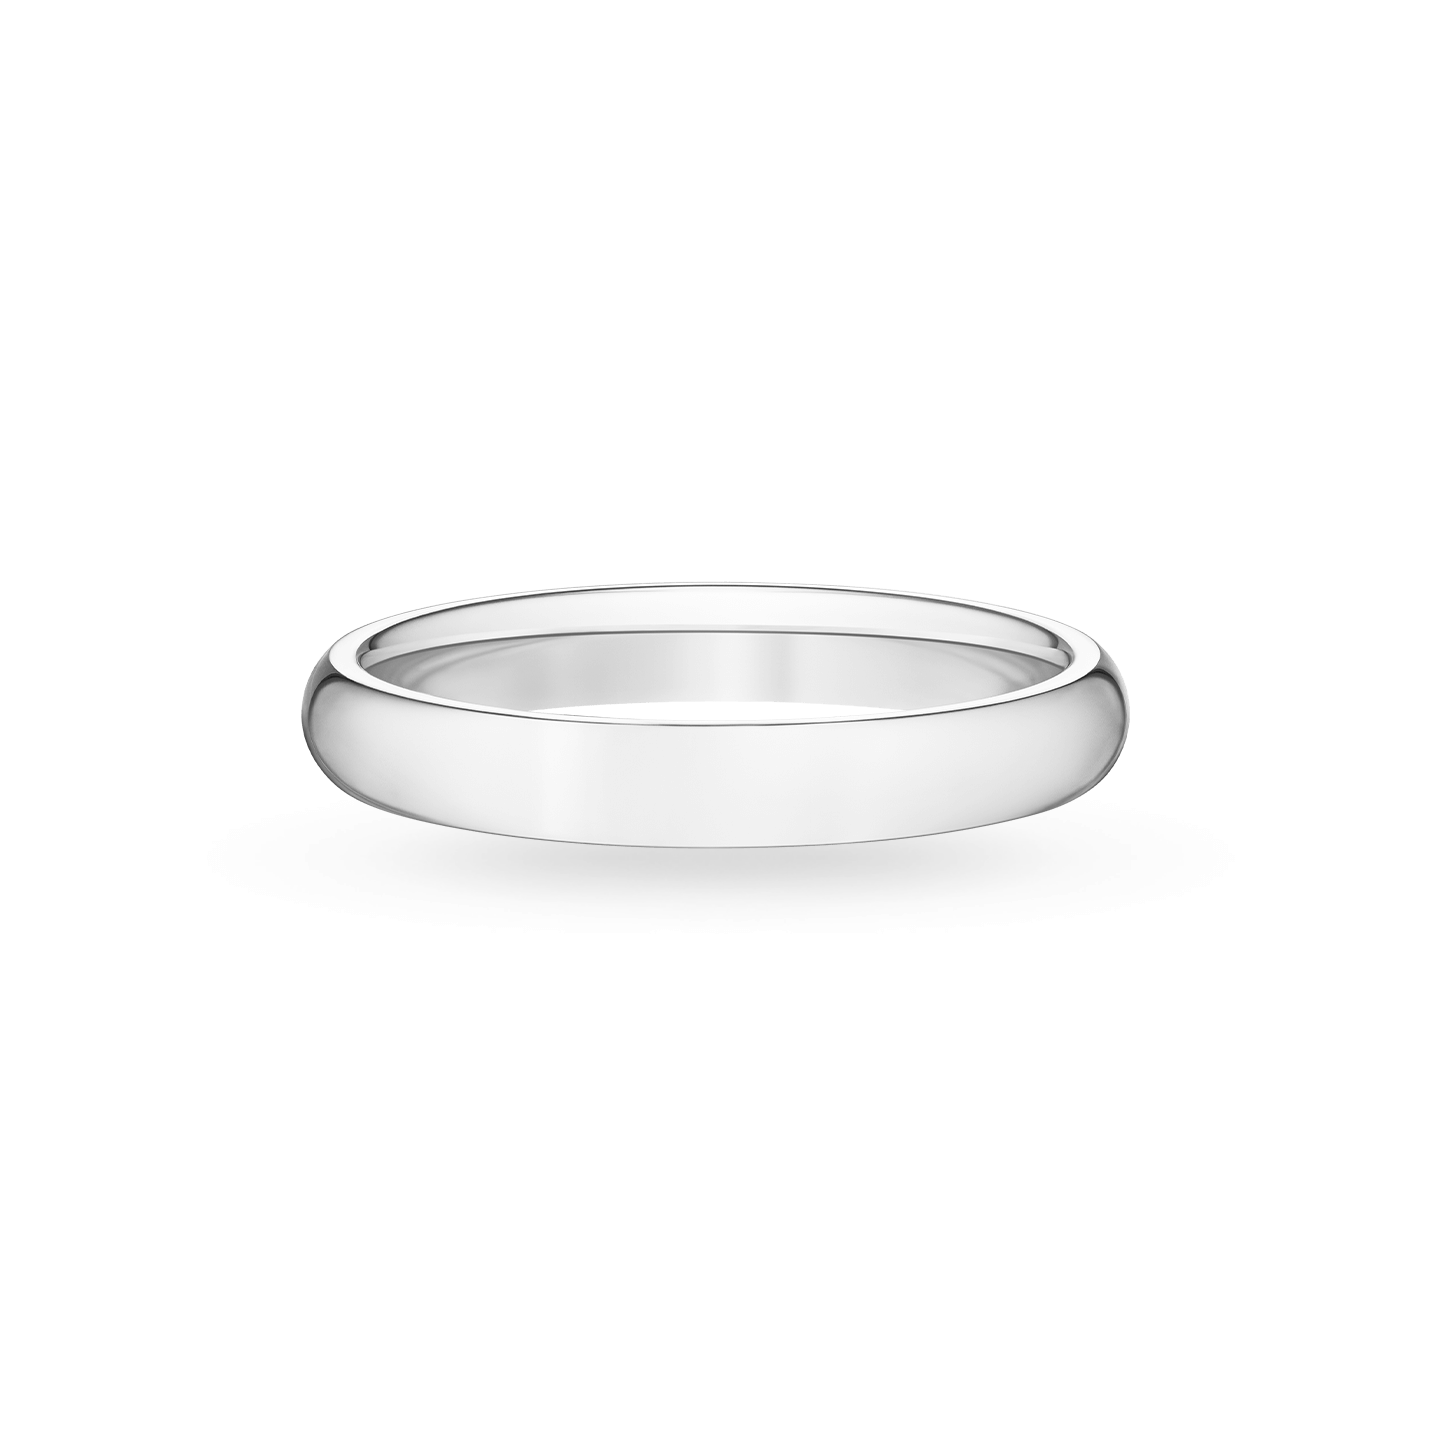 Oval Cut Moissanite Engagement Ring, Plain Band & Hidden Halo – Flawless  Moissanite